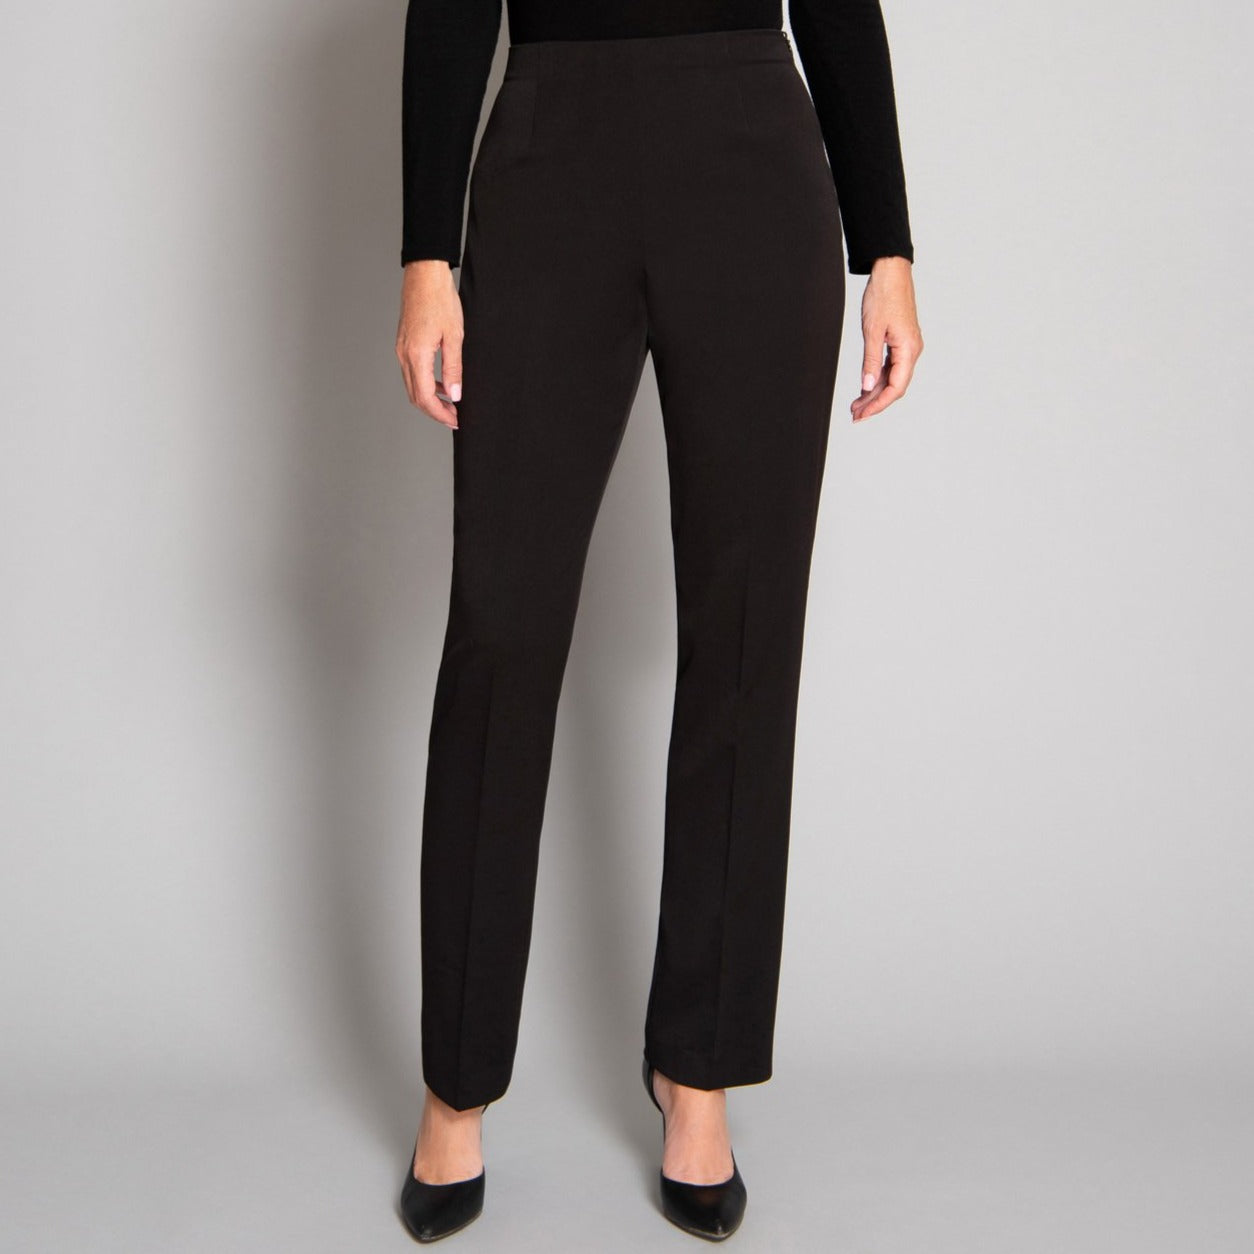 Chico's Women's Black Dress Pants Left Side Zipper Size 2.5